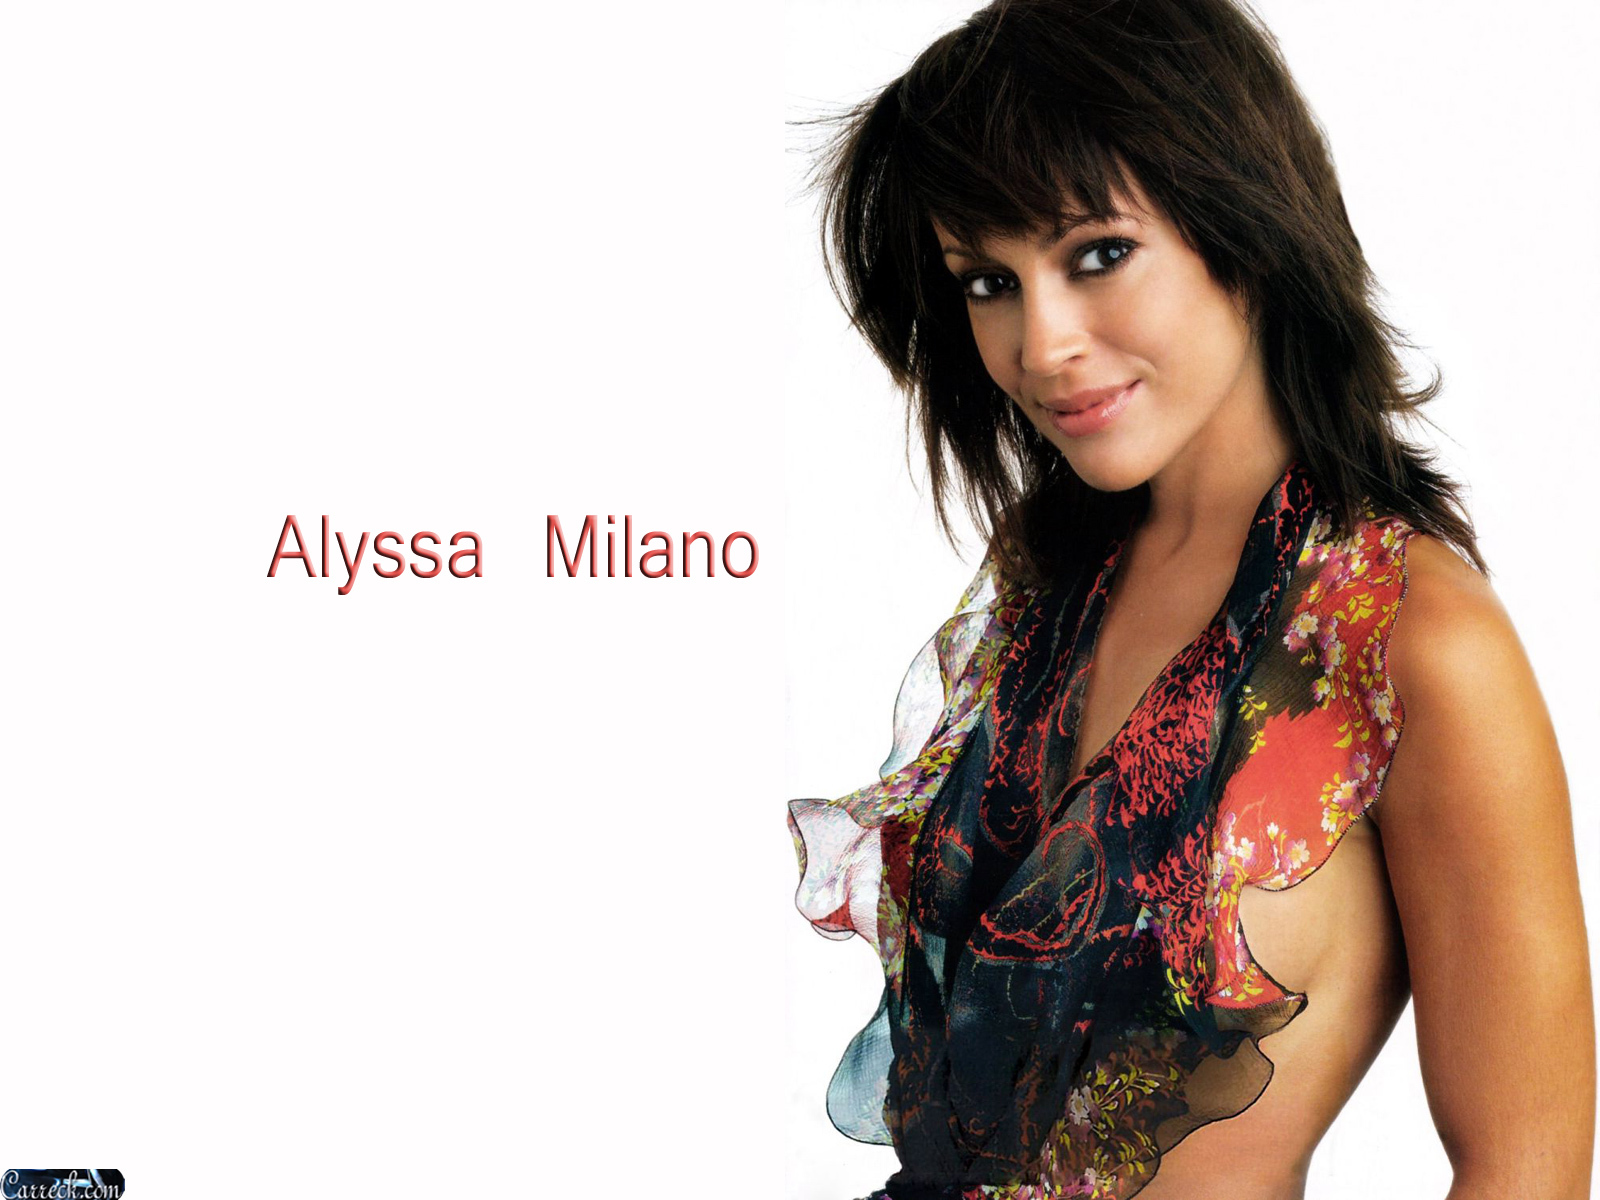 Alyssa Milano Wallpaper Image Photos Pictures Background